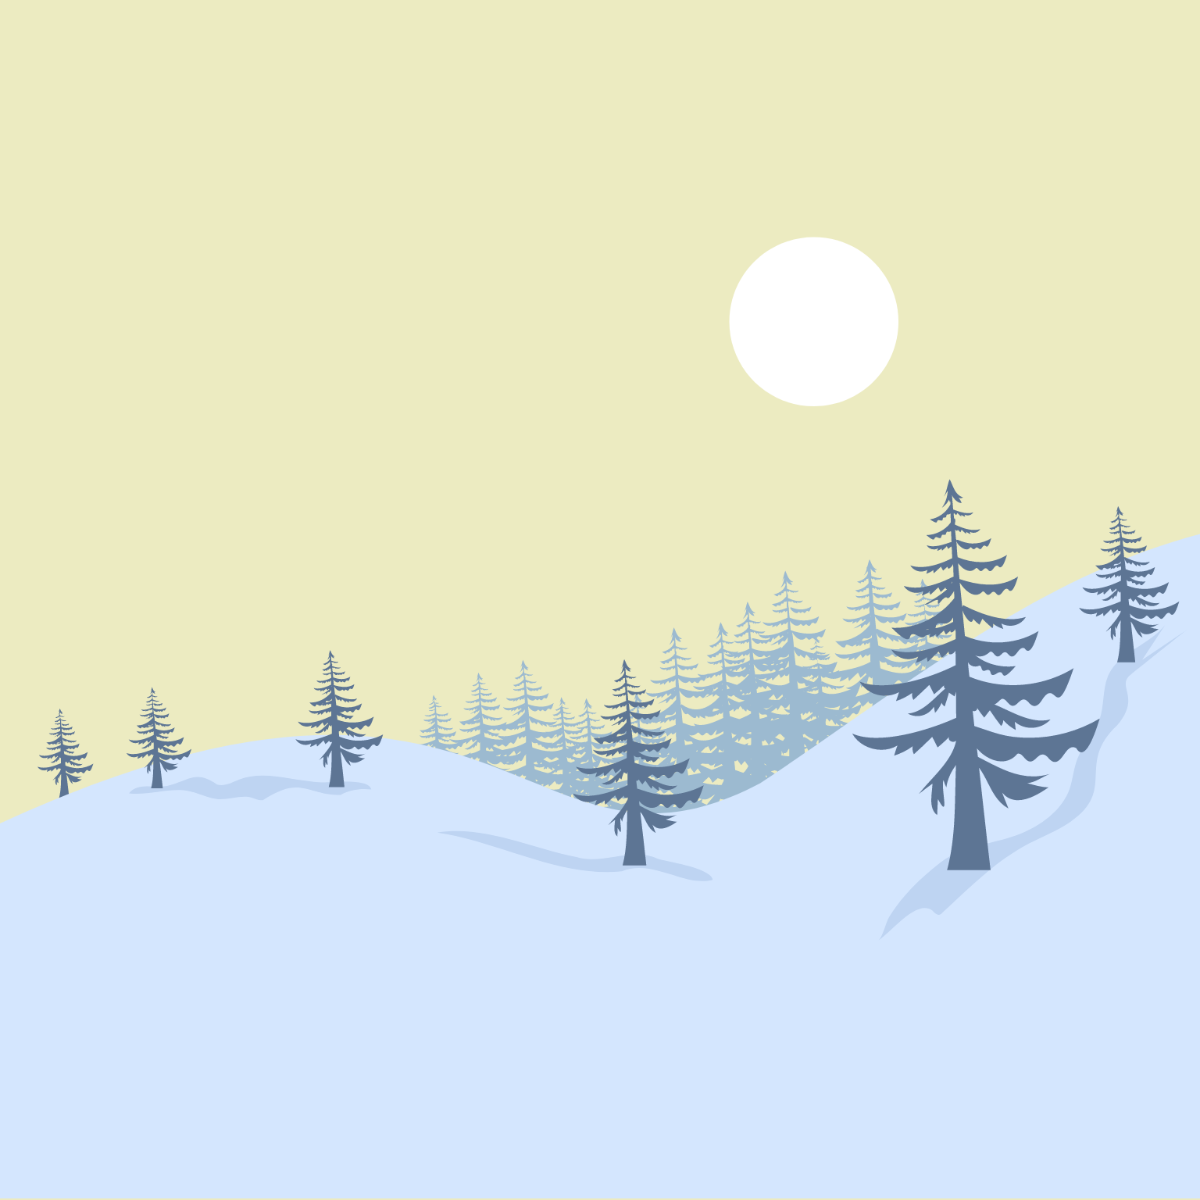 Winter Solstice Illustration Template